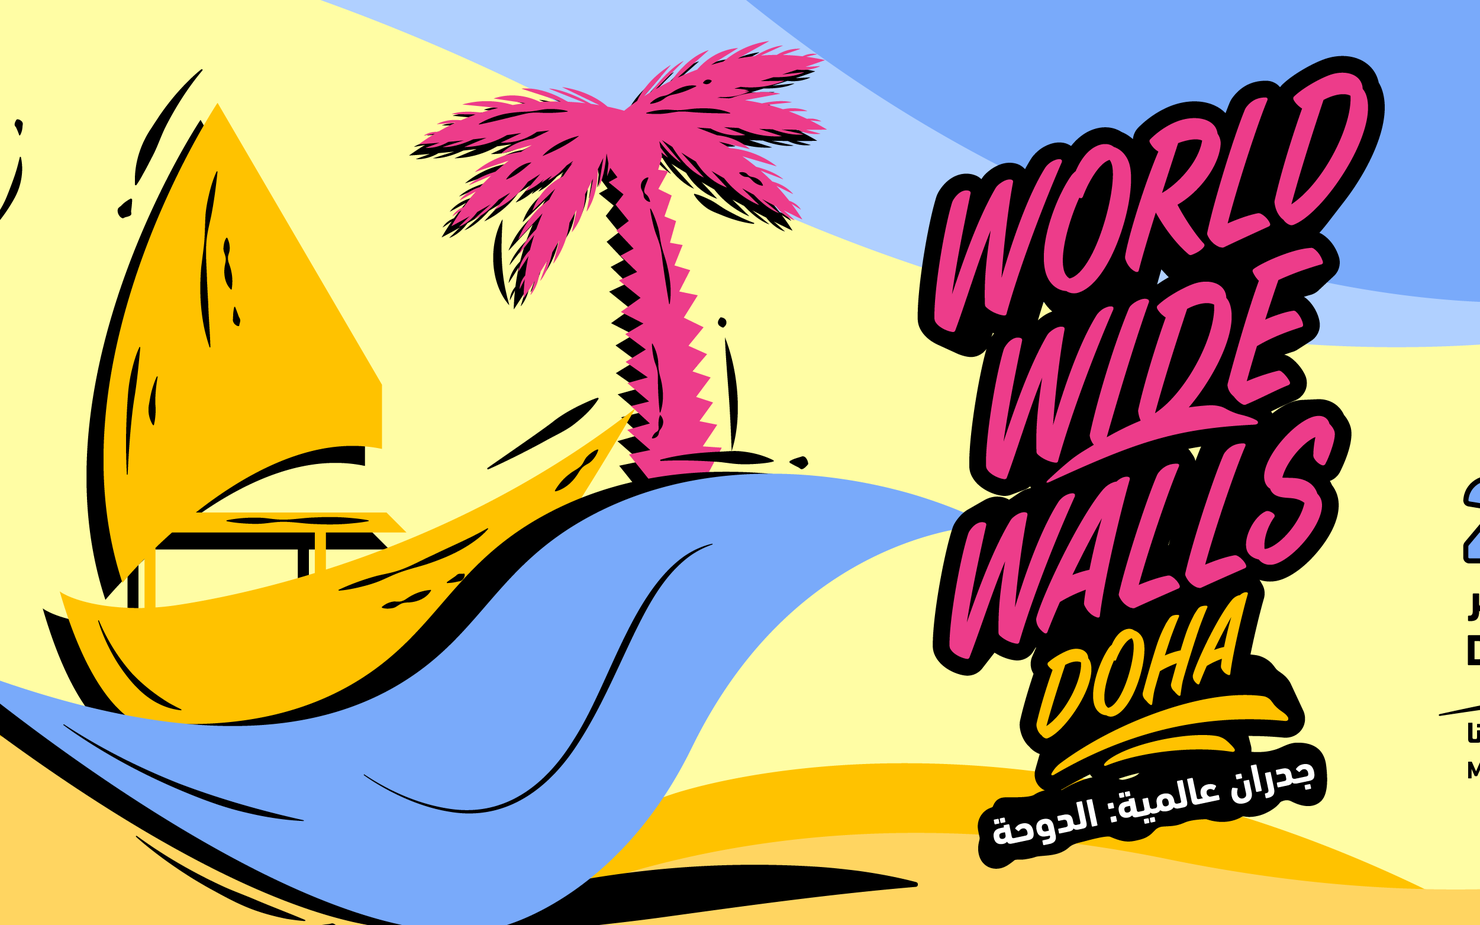 World Wide Walls: Doha - Qatar Museums